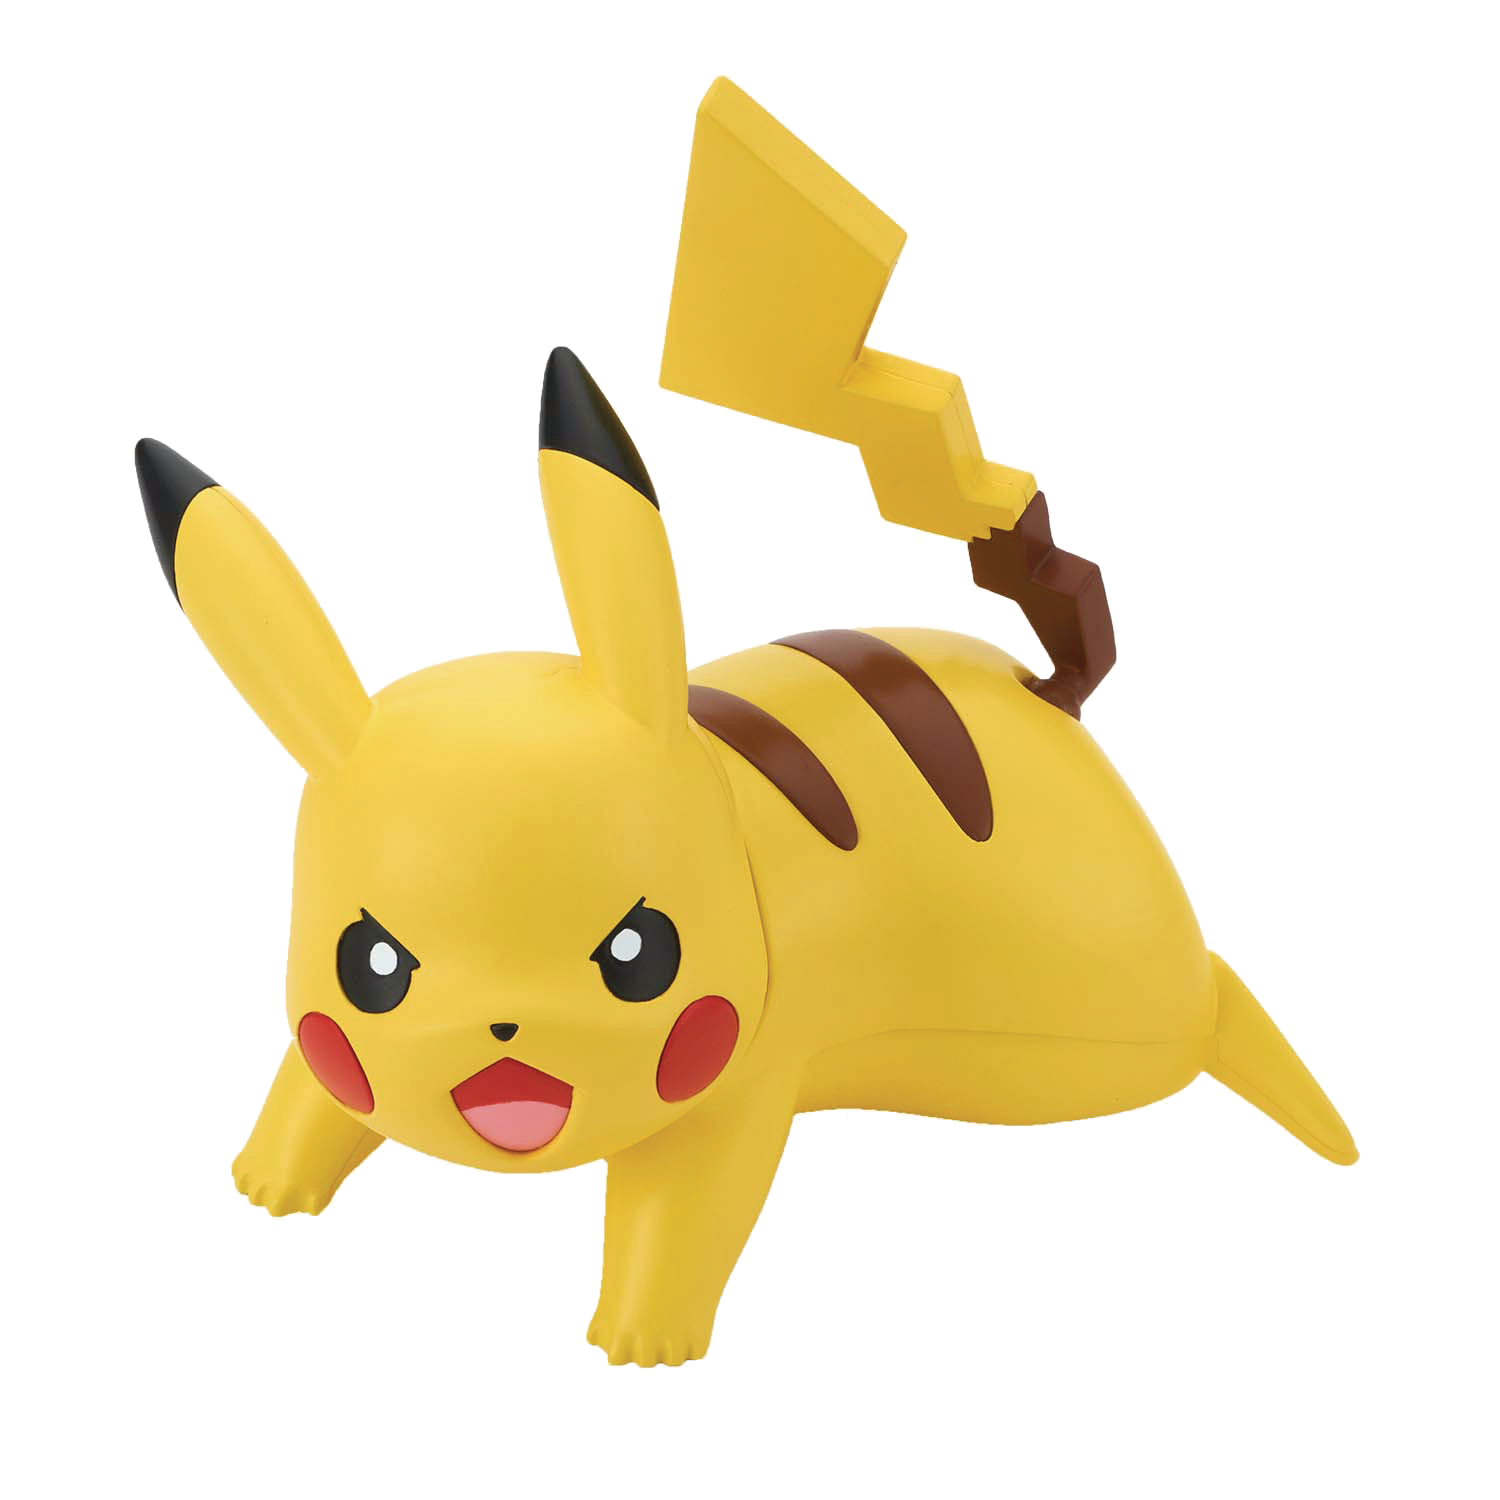 Pokémon 3 Pikachu Battle Pose Quick Model Kit